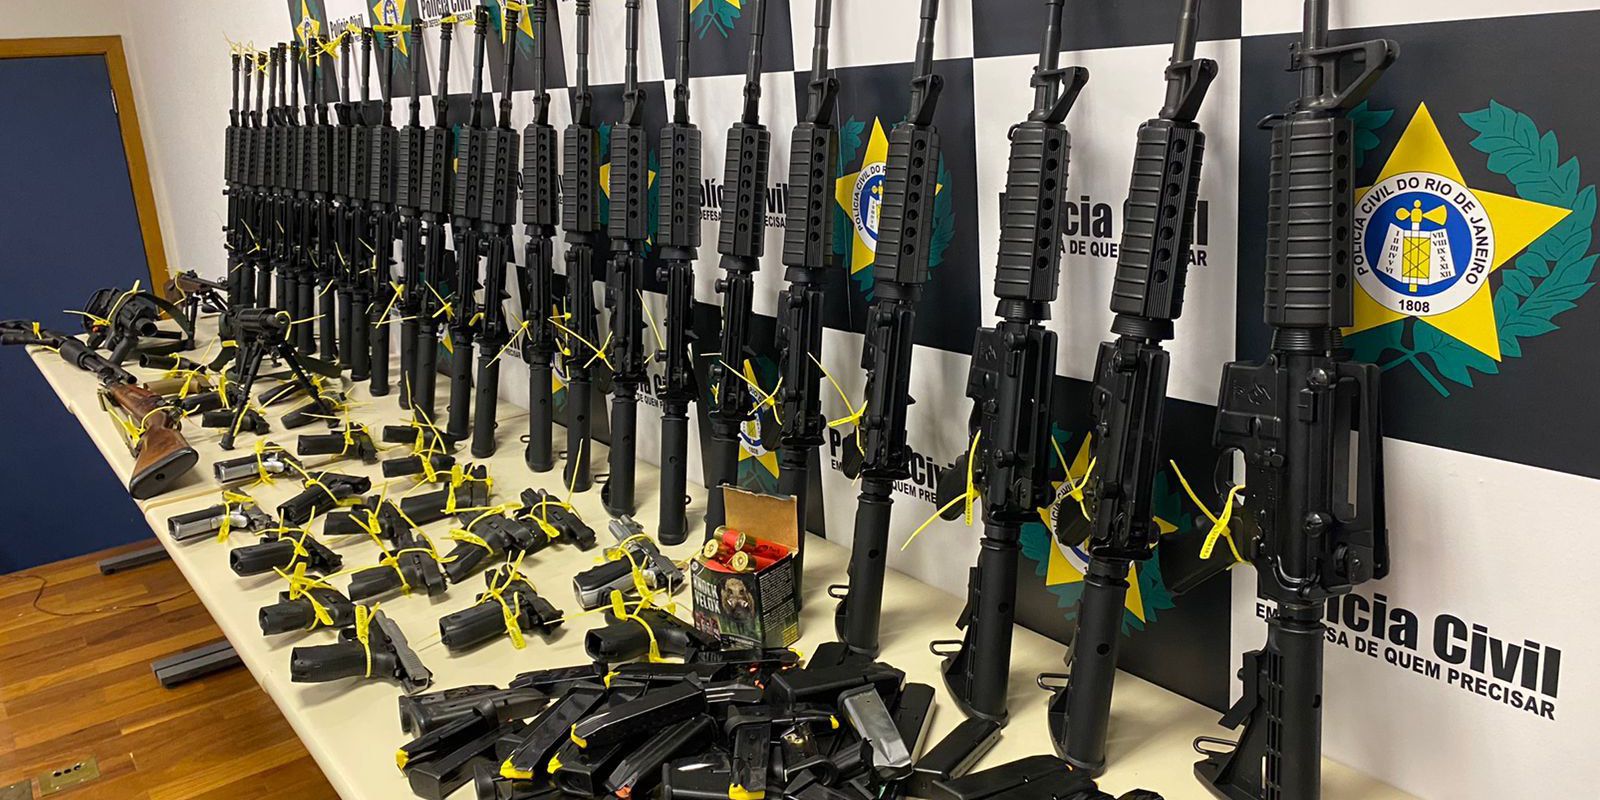 Military Police remove 205 rifles from organized crime in Rio de Janeiro